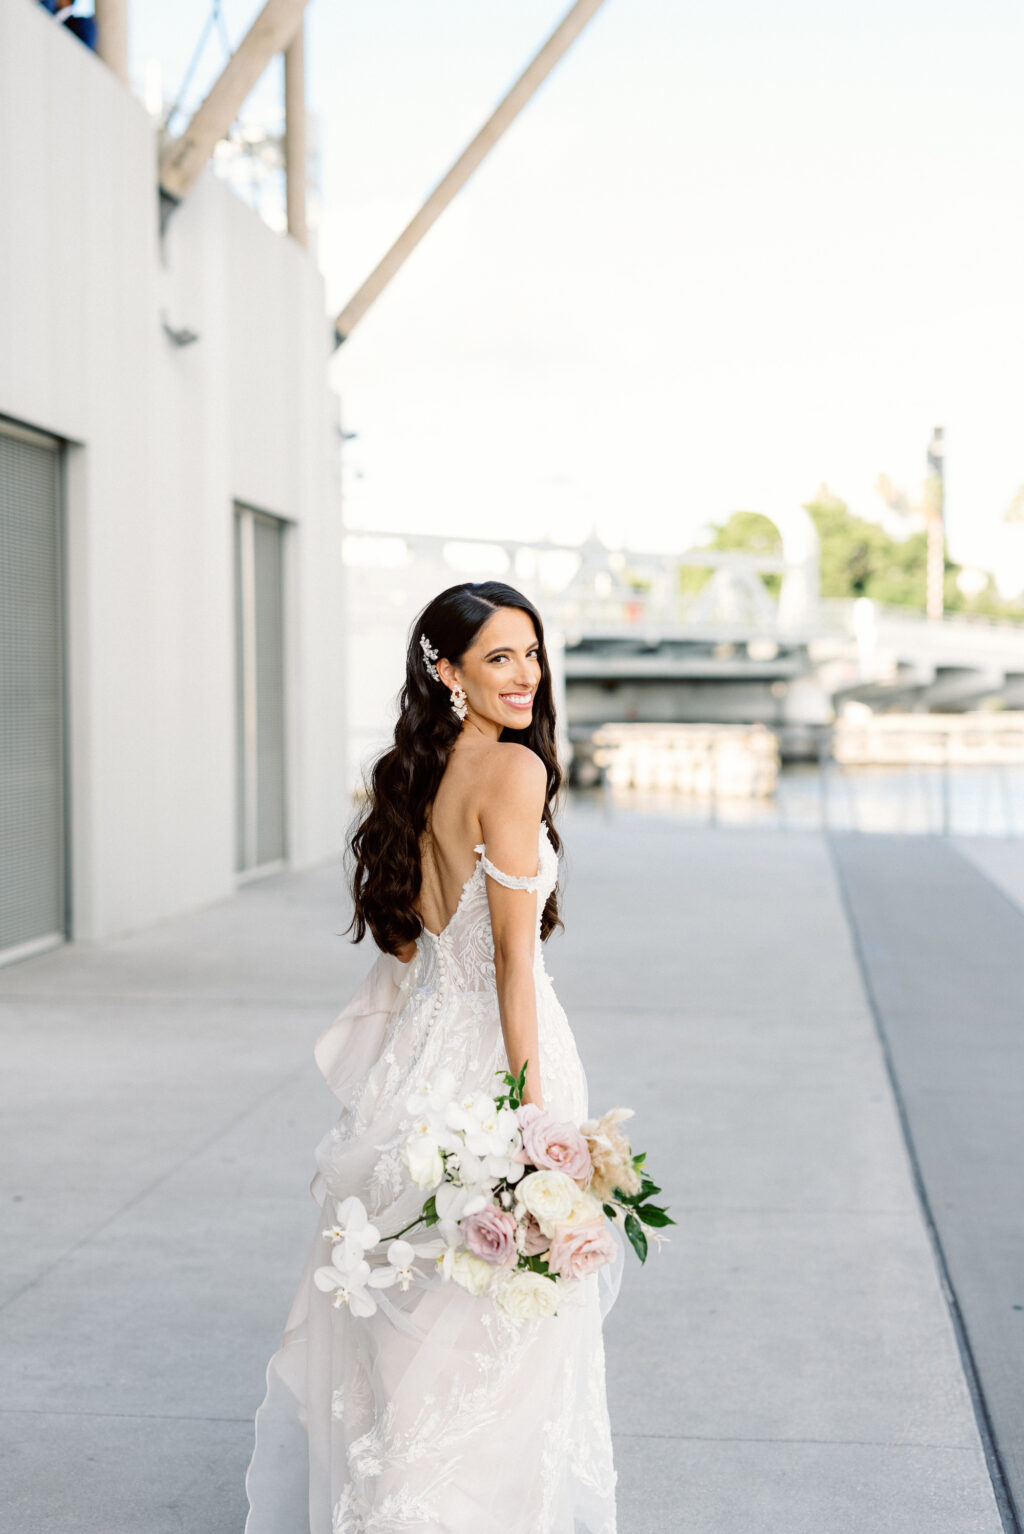 Bridal Glamour Wedding Portrait | Tampa Bay Photographer Dewitt for Love | Videographer J&S Media